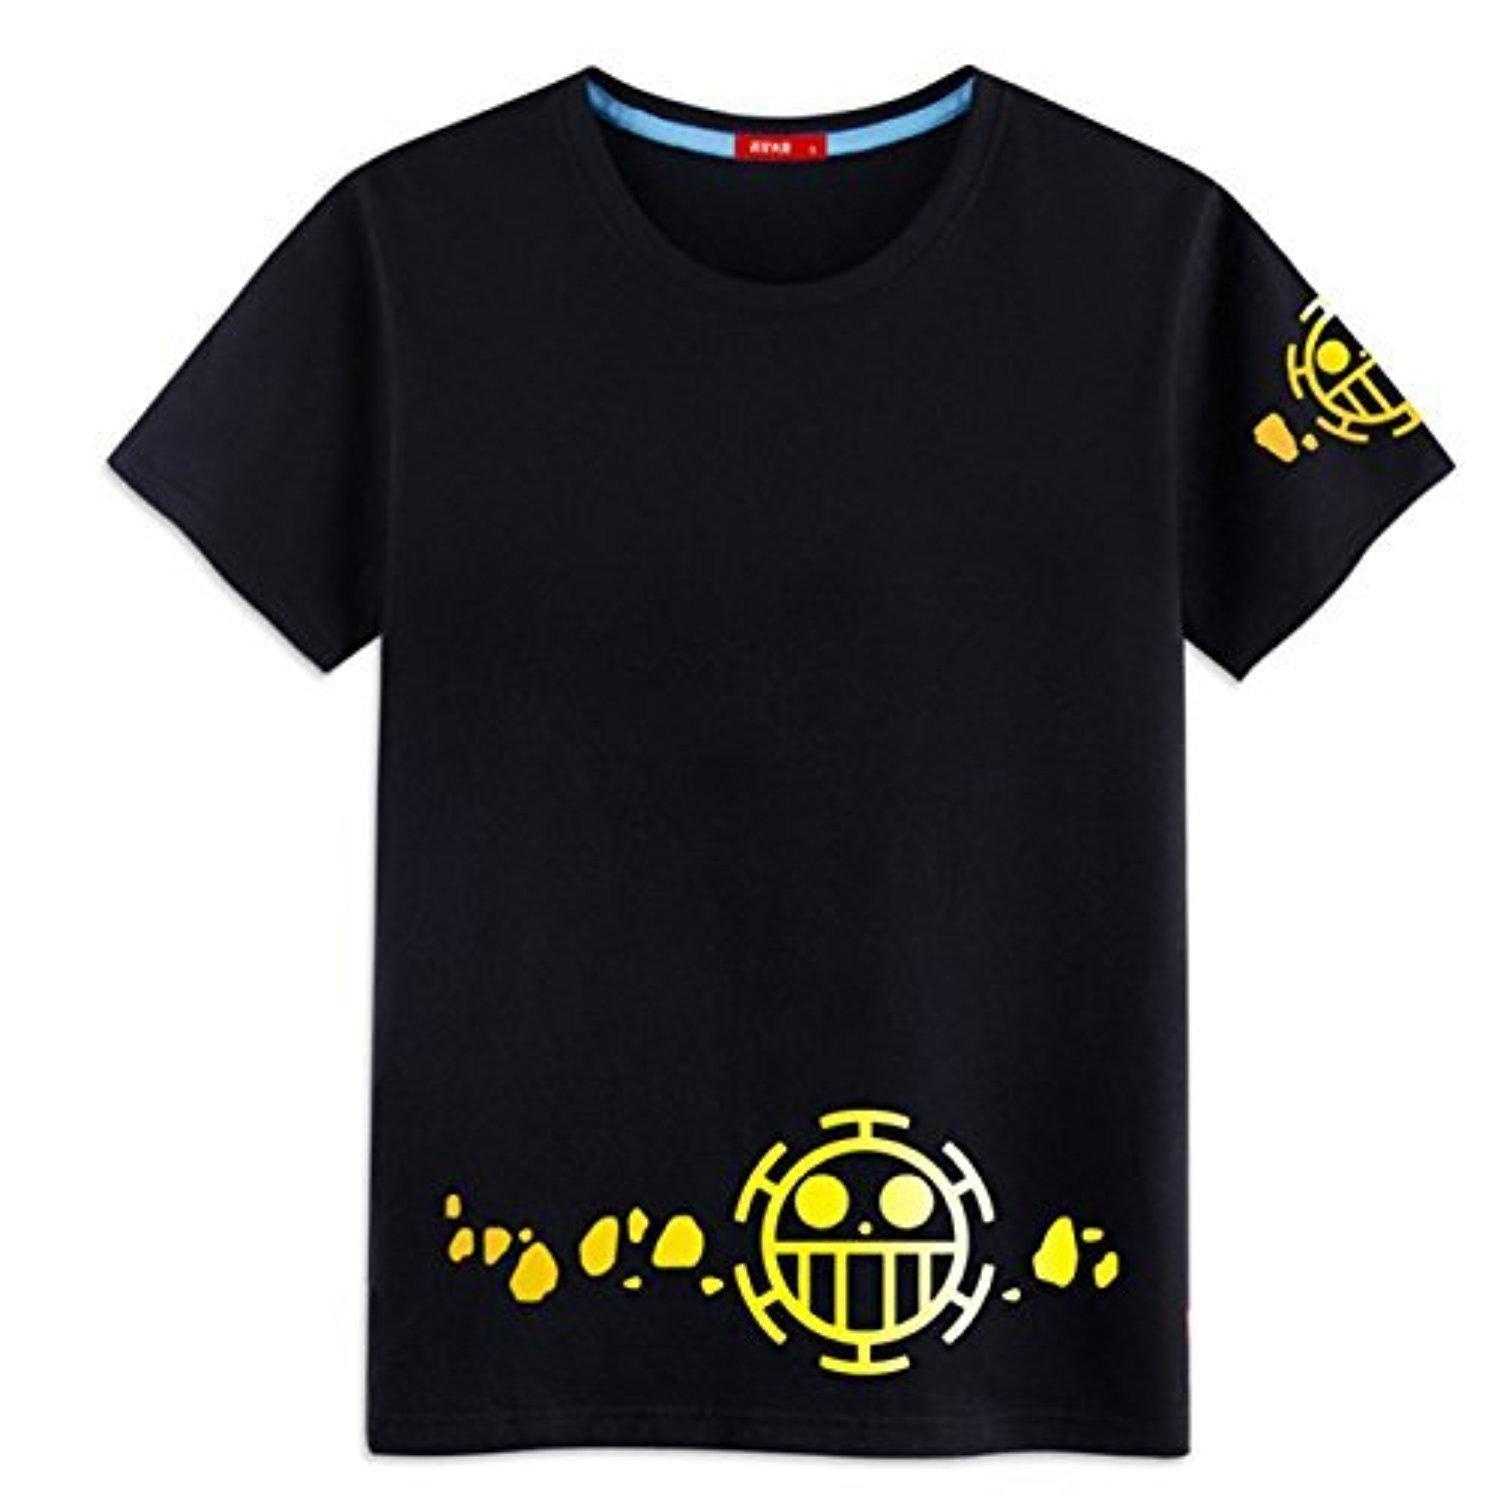 Vicwin-One One Piece Trafalgar Law Logo T-shirt Size M by Vicwin ...